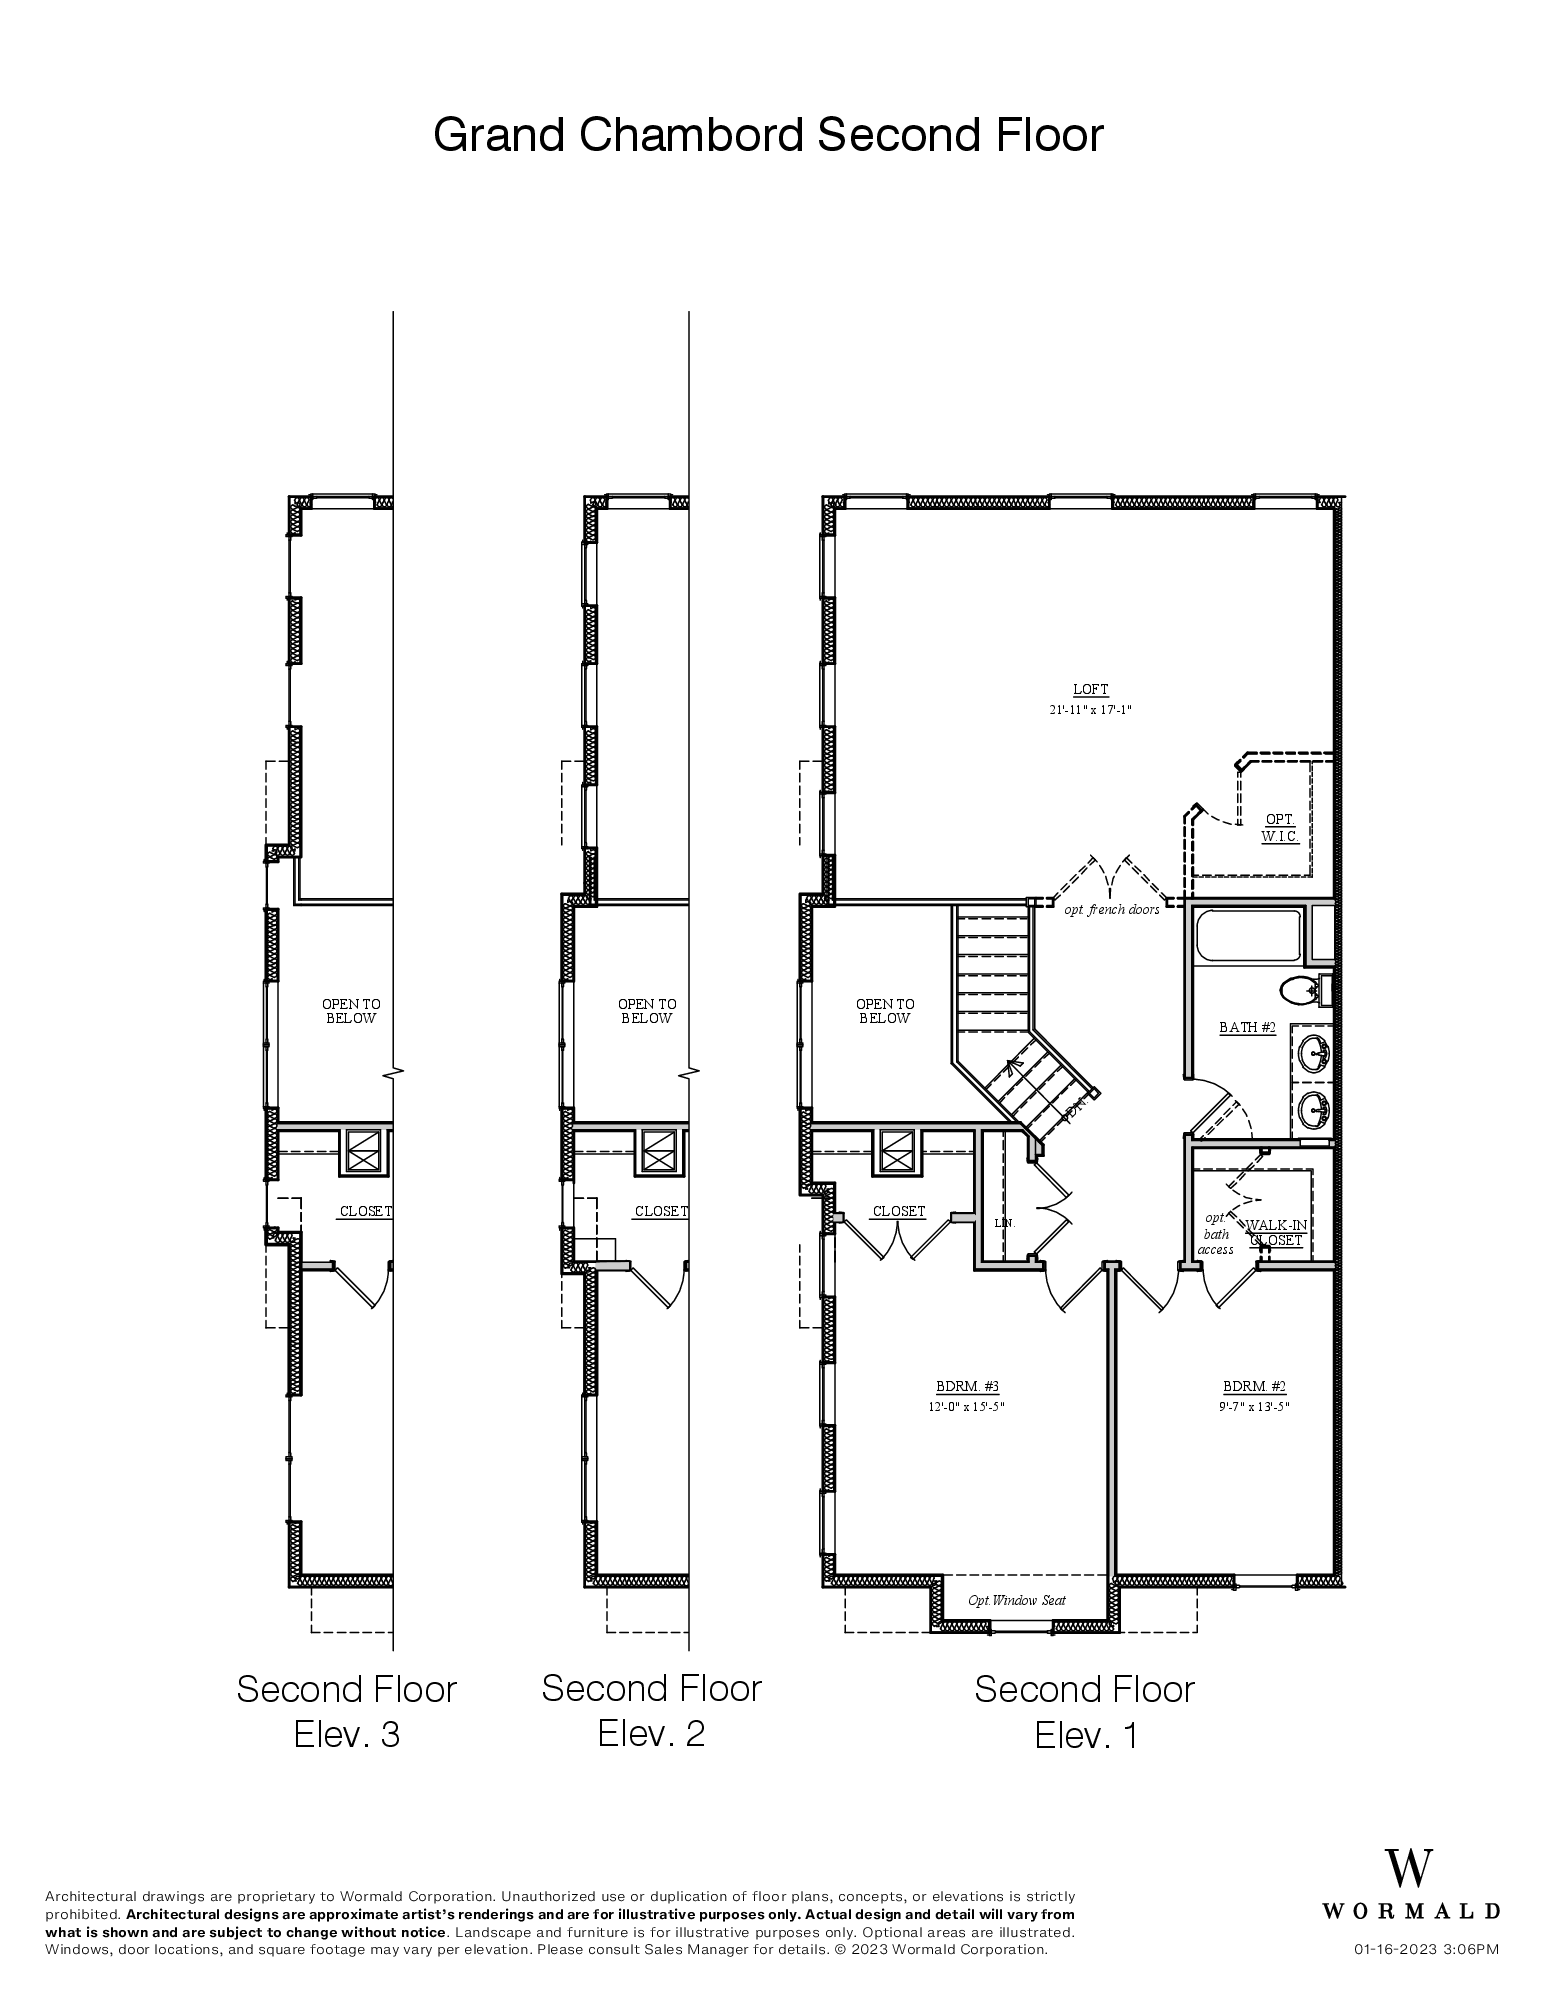 The Grand Chambord floor plan 1